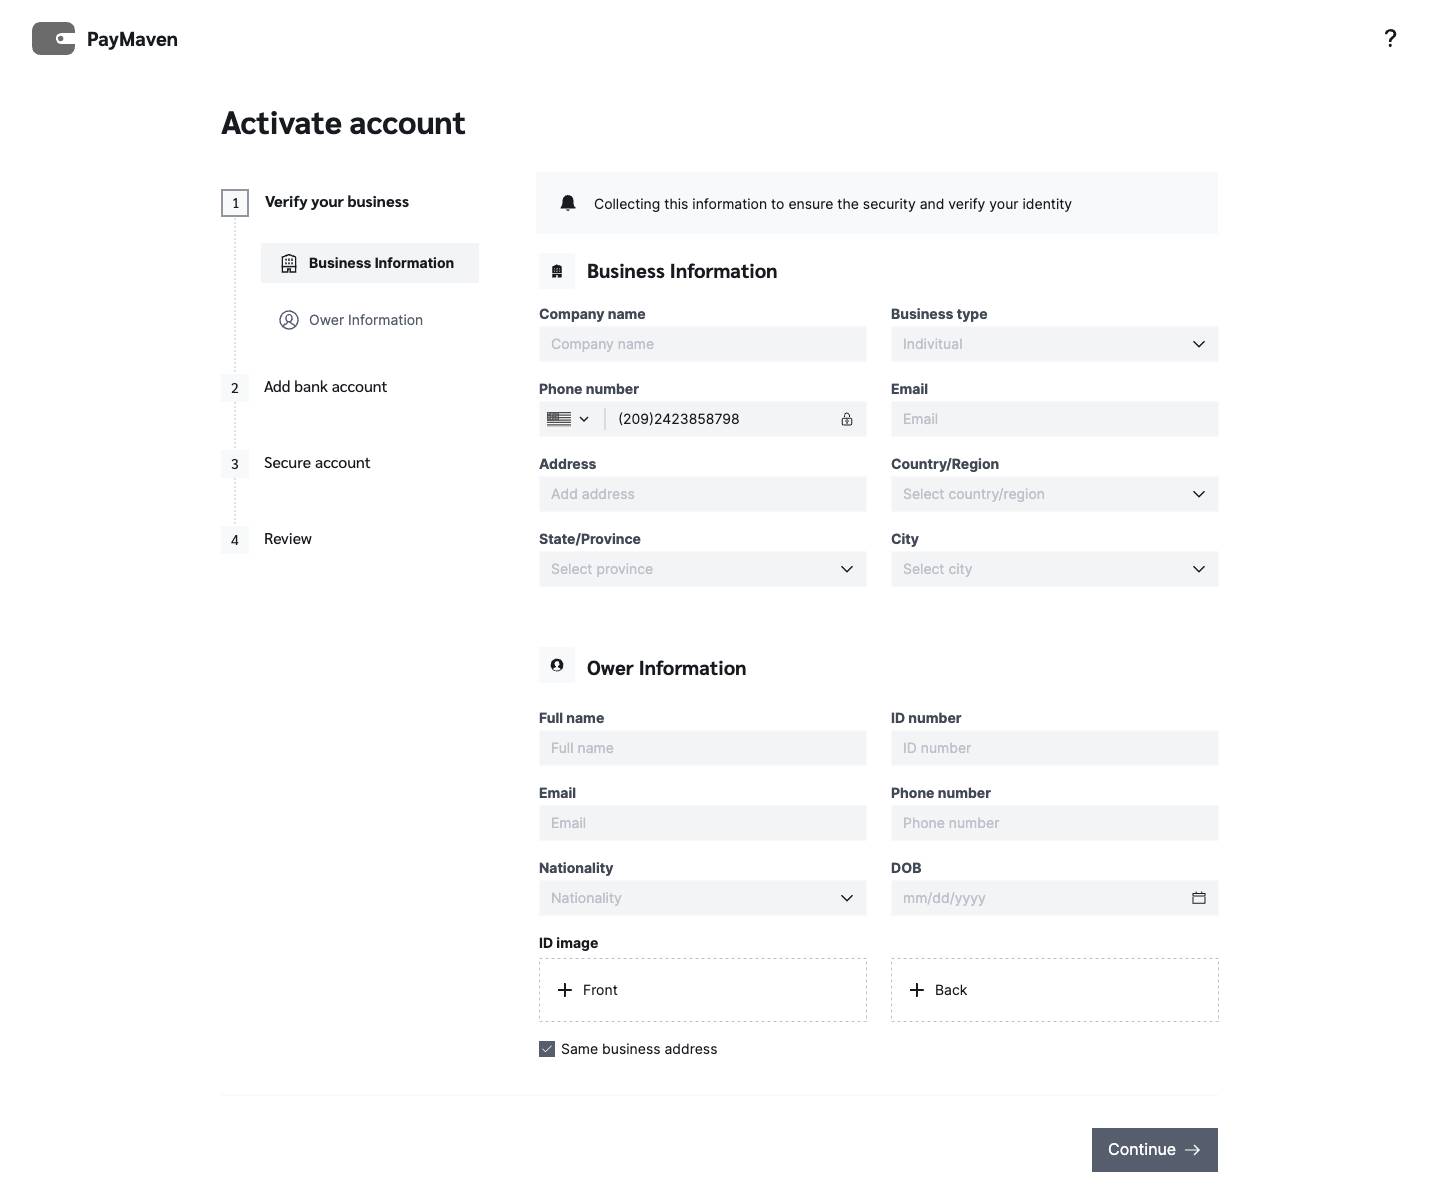 Activate account -  Verify business